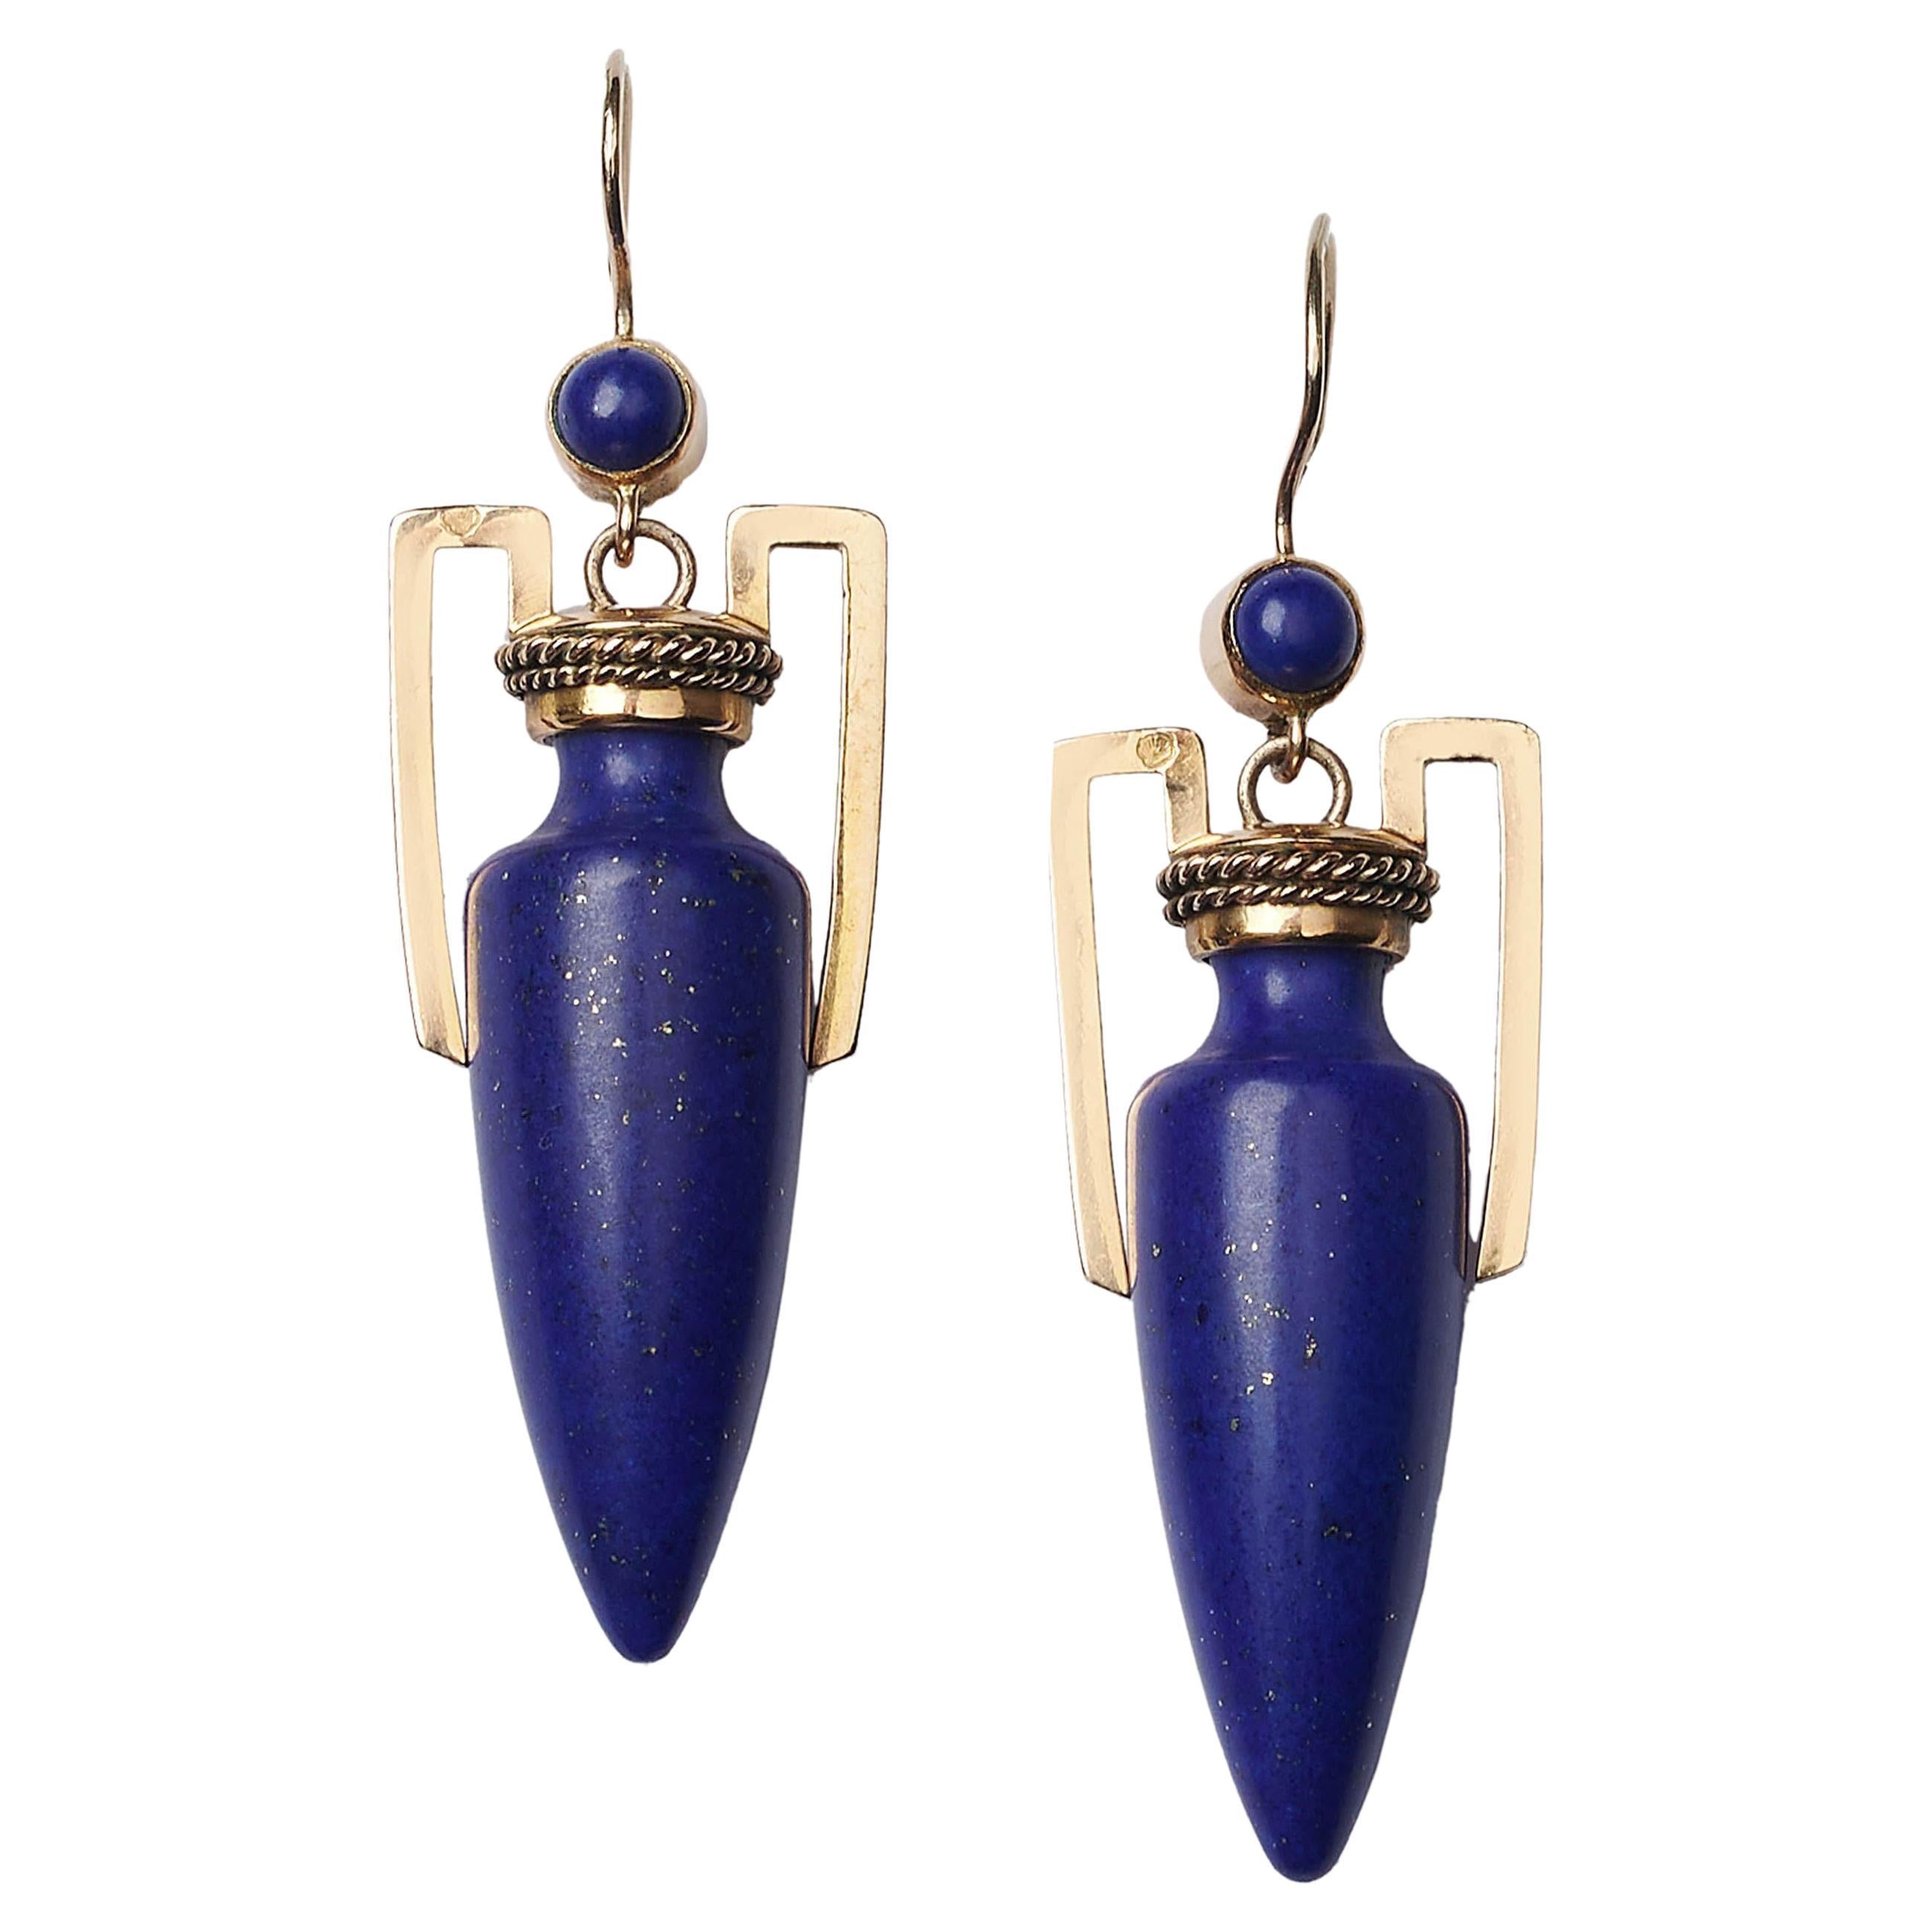 Antique Lapis Lazuli And Gold Amphora Earrings, Circa 1875